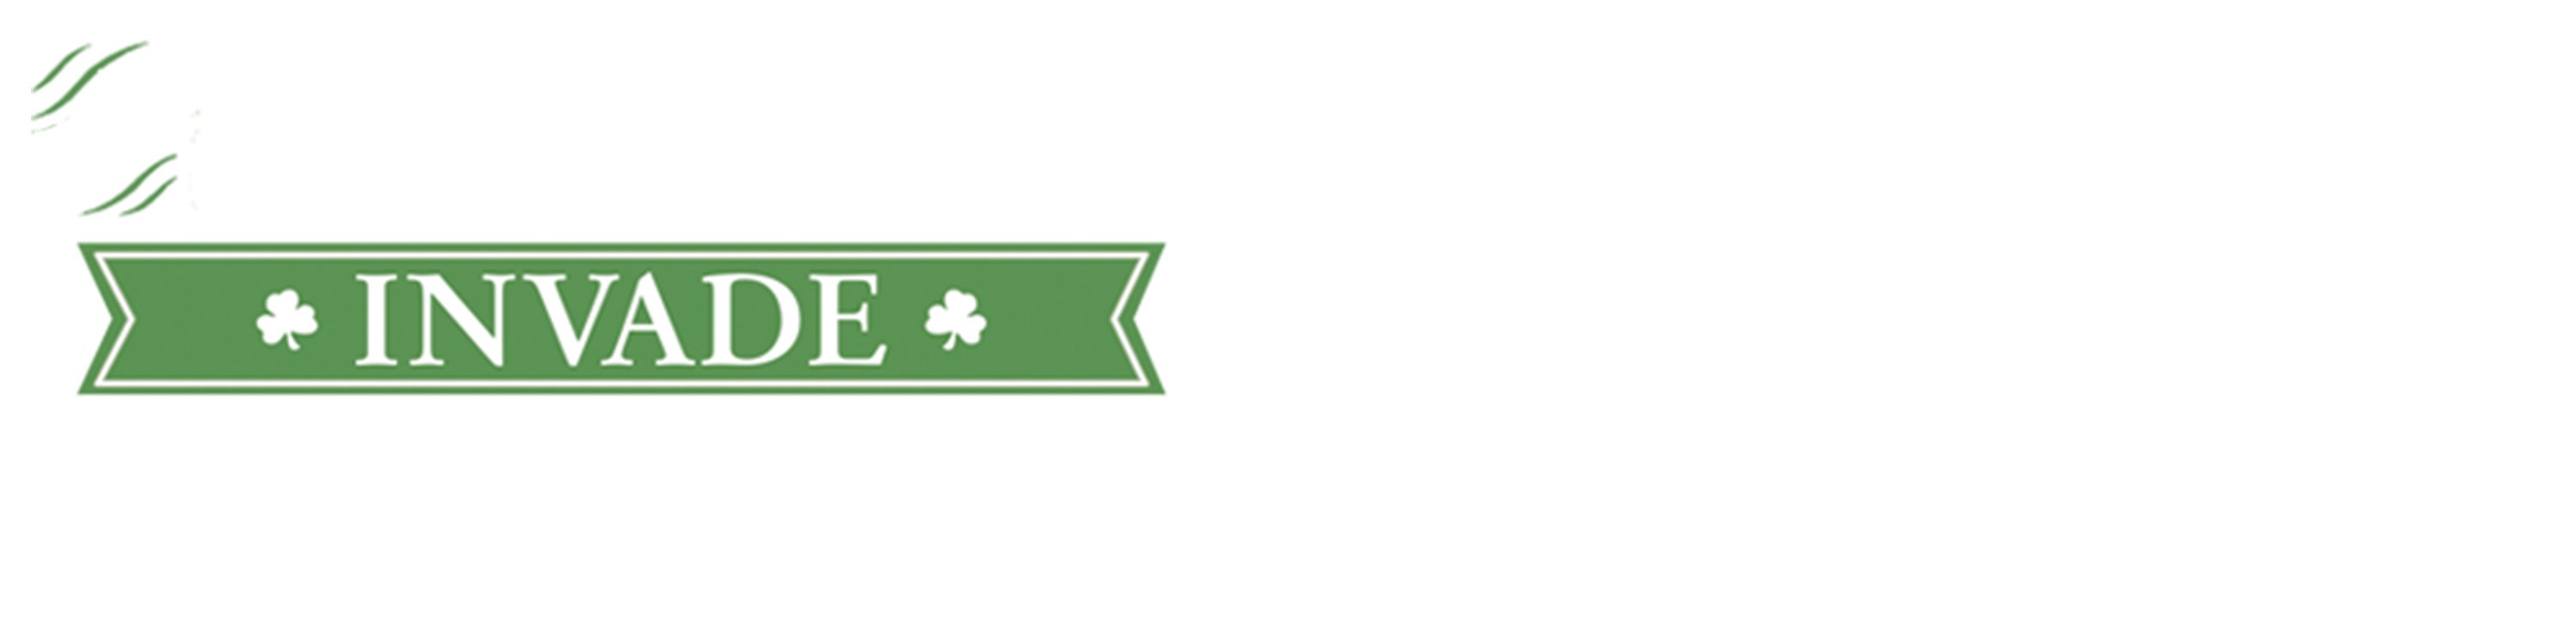 The Irish Invade Canada logo